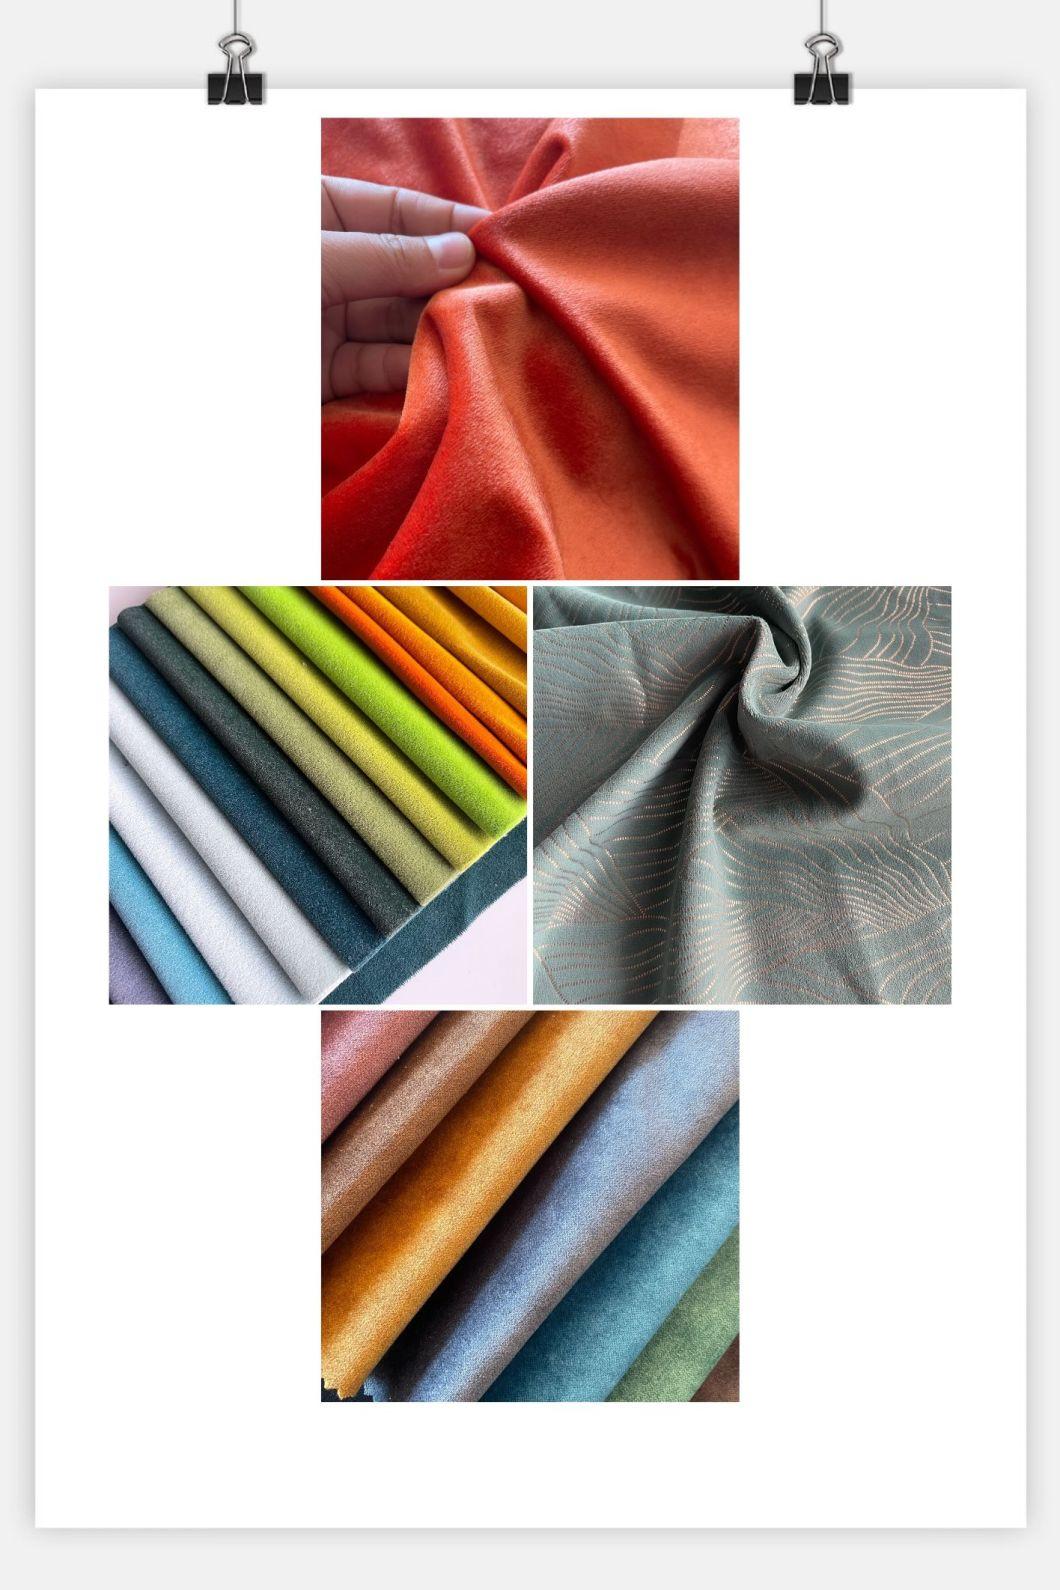 Super Soft Chenille Fabric for Sofa Furniture Curtain (WH022)